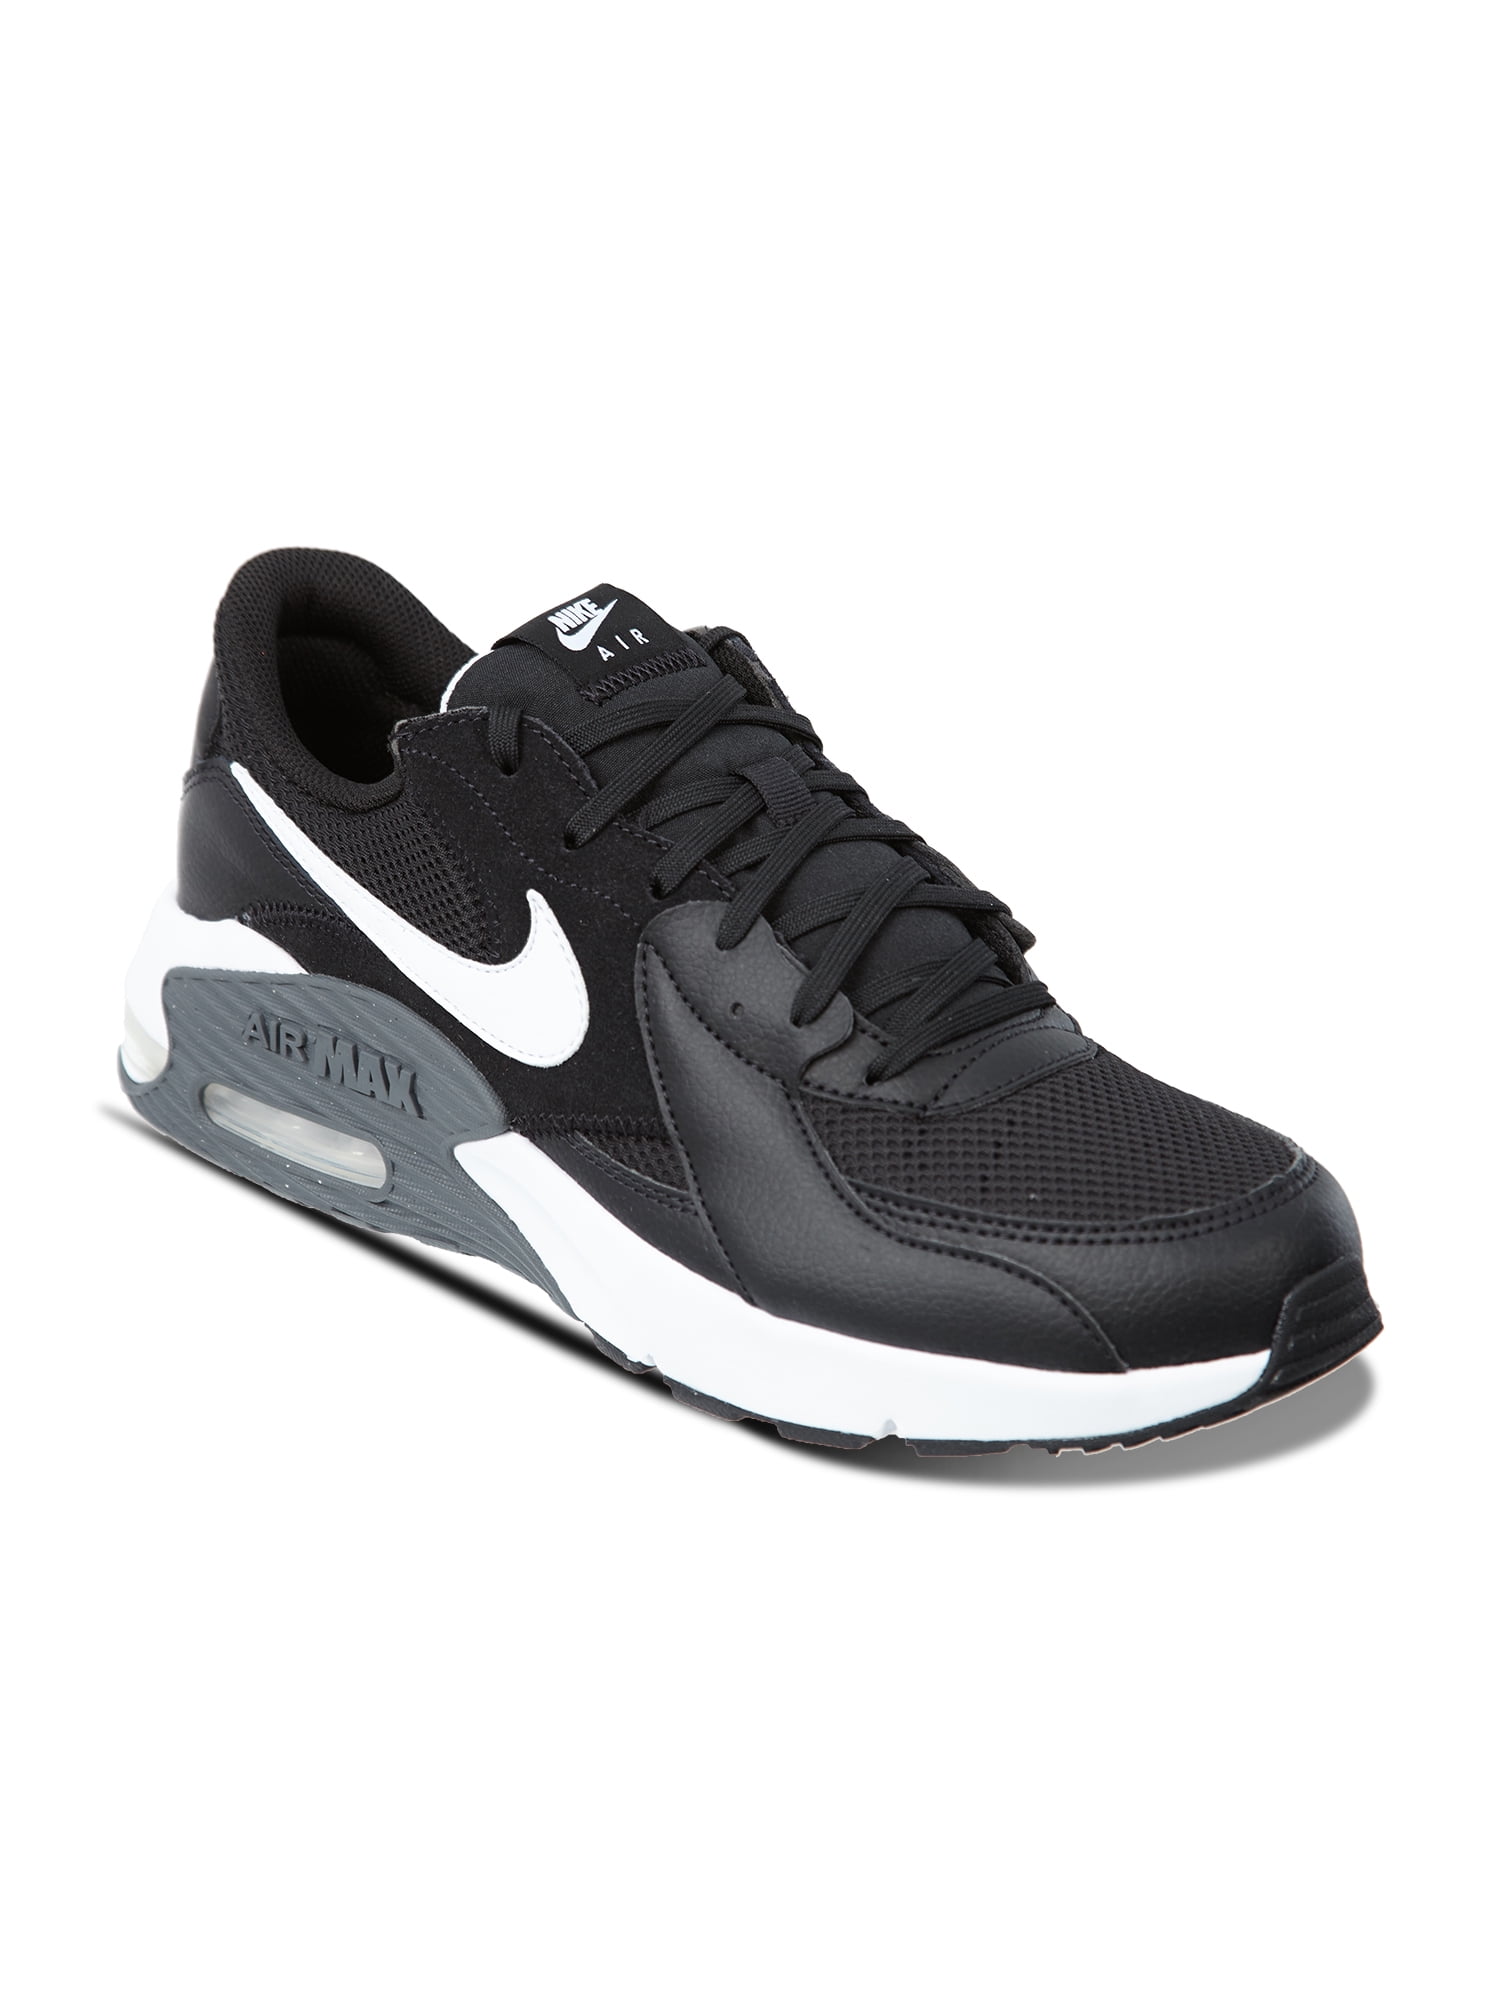 ligado agujas del reloj Último Nike Men's Air Max Excee Running Athletic Sneakers - Walmart.com